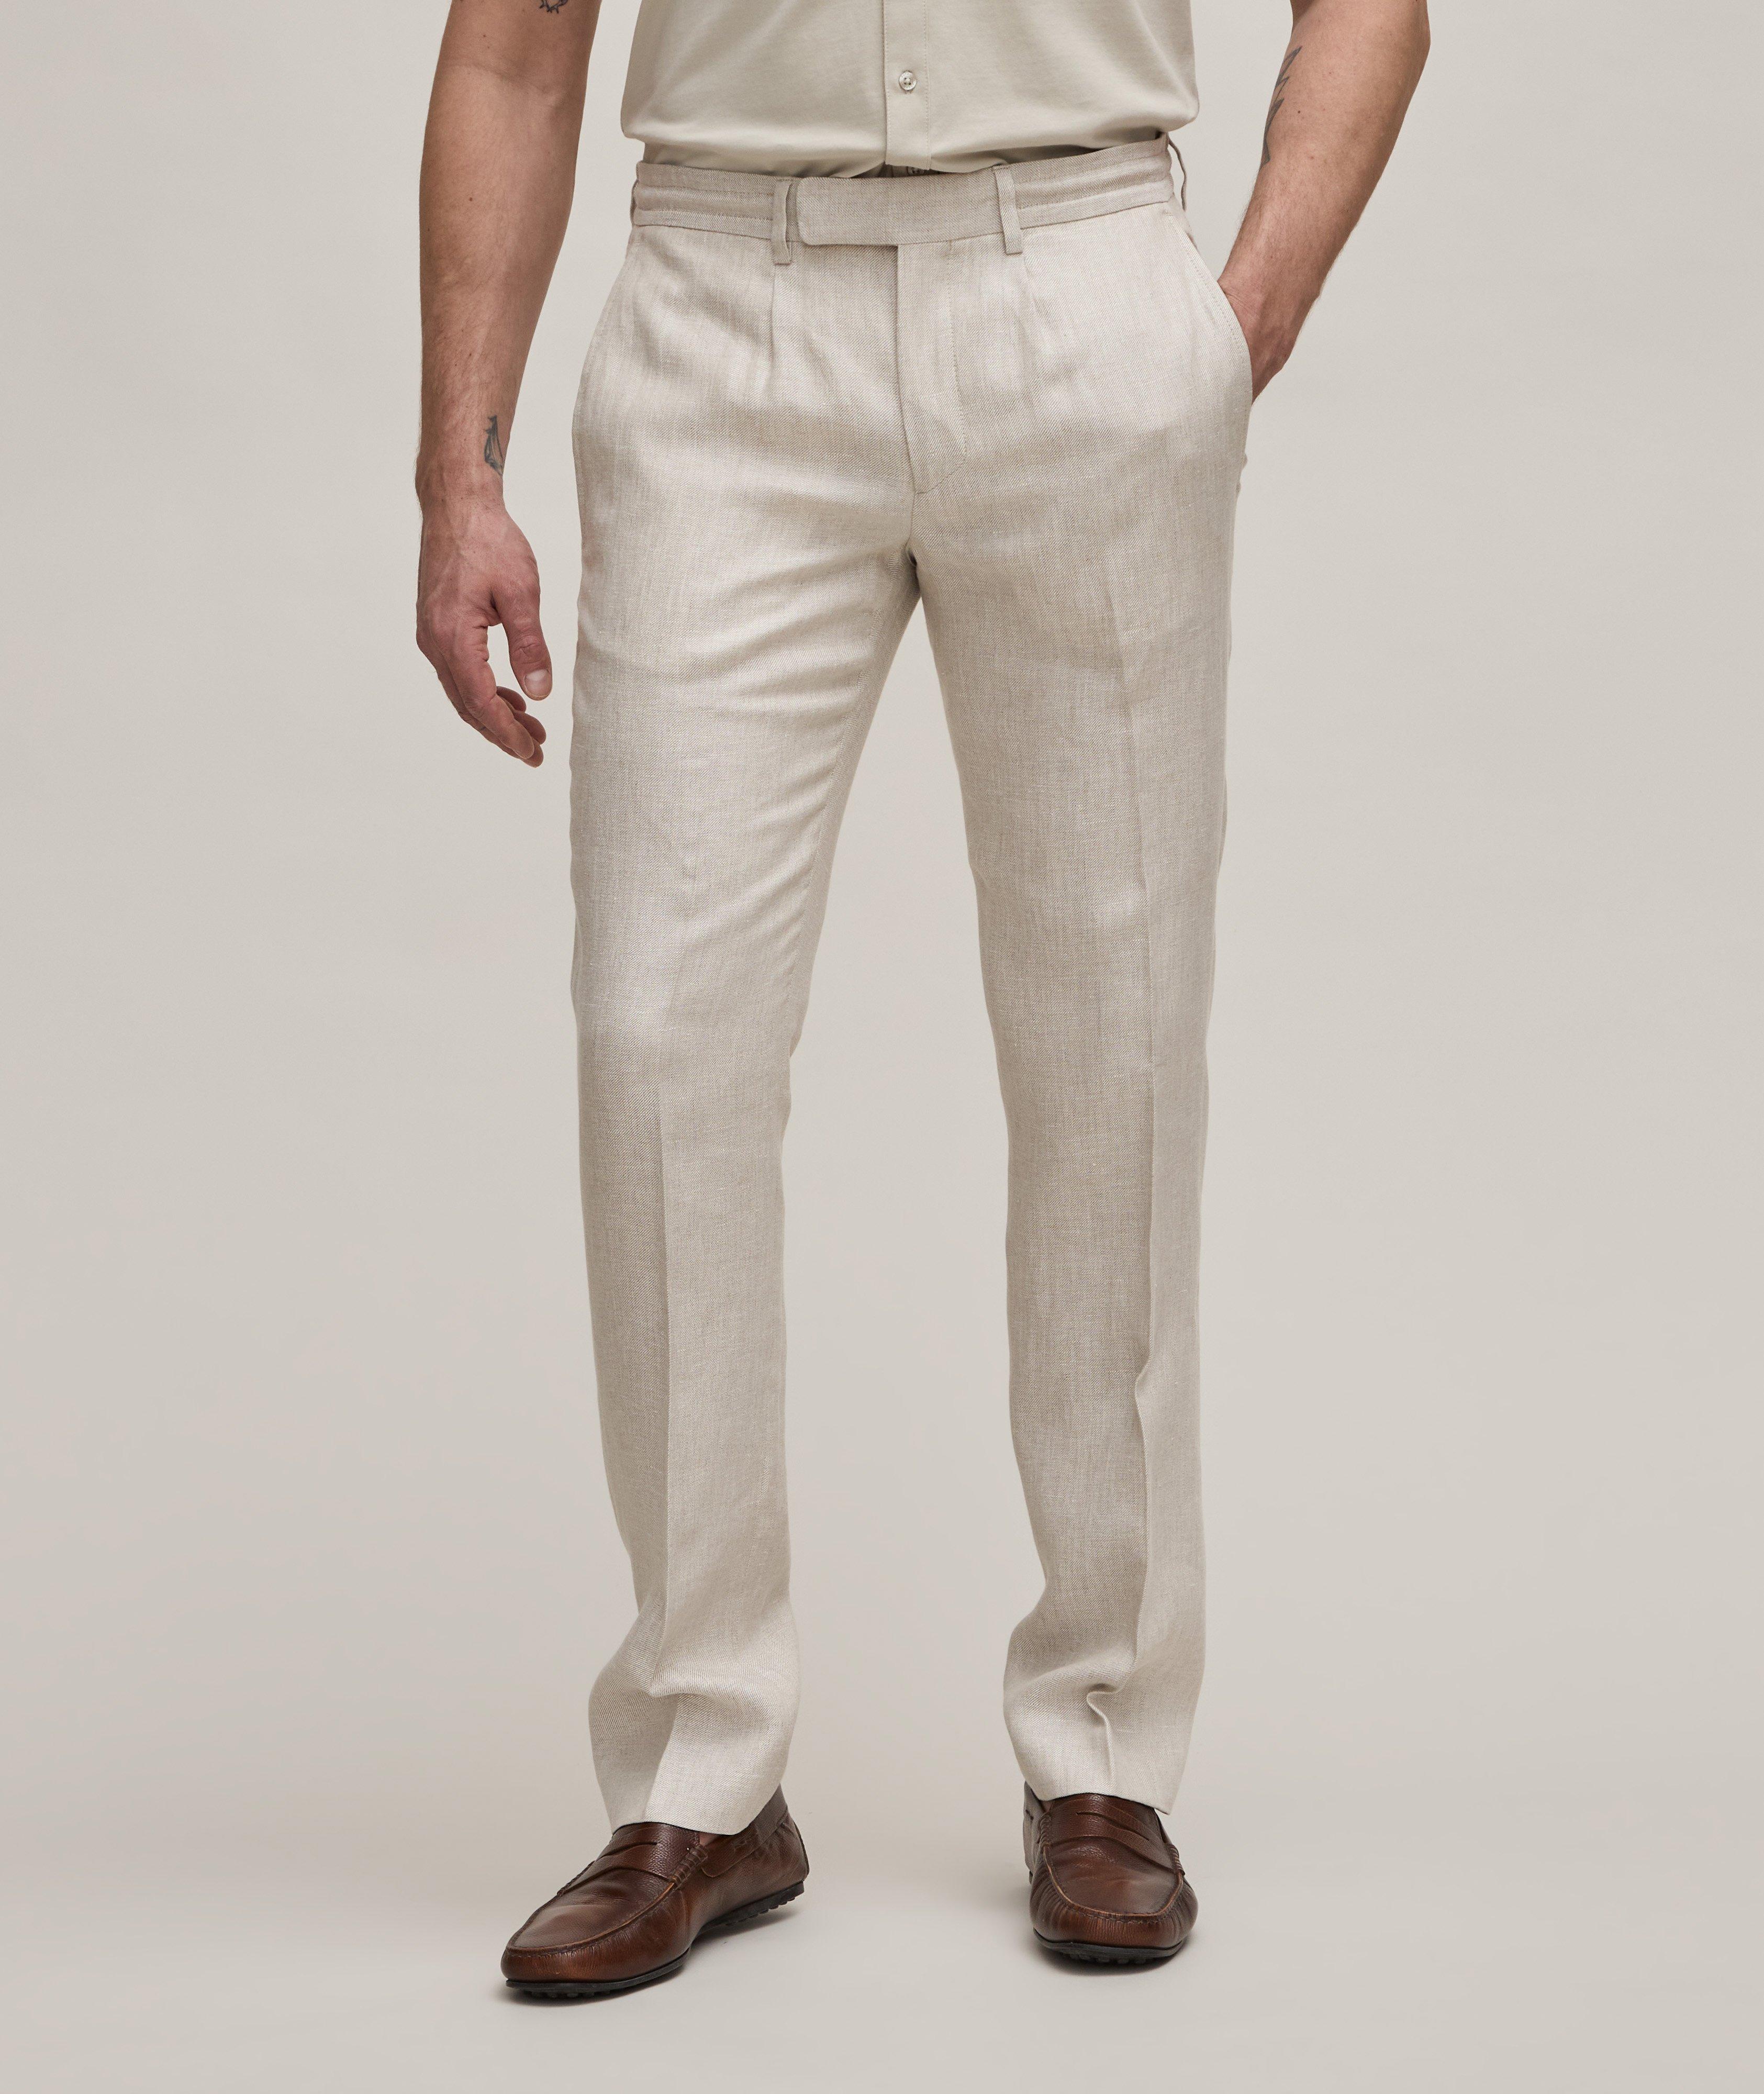 Drawstring Linen Pants image 1